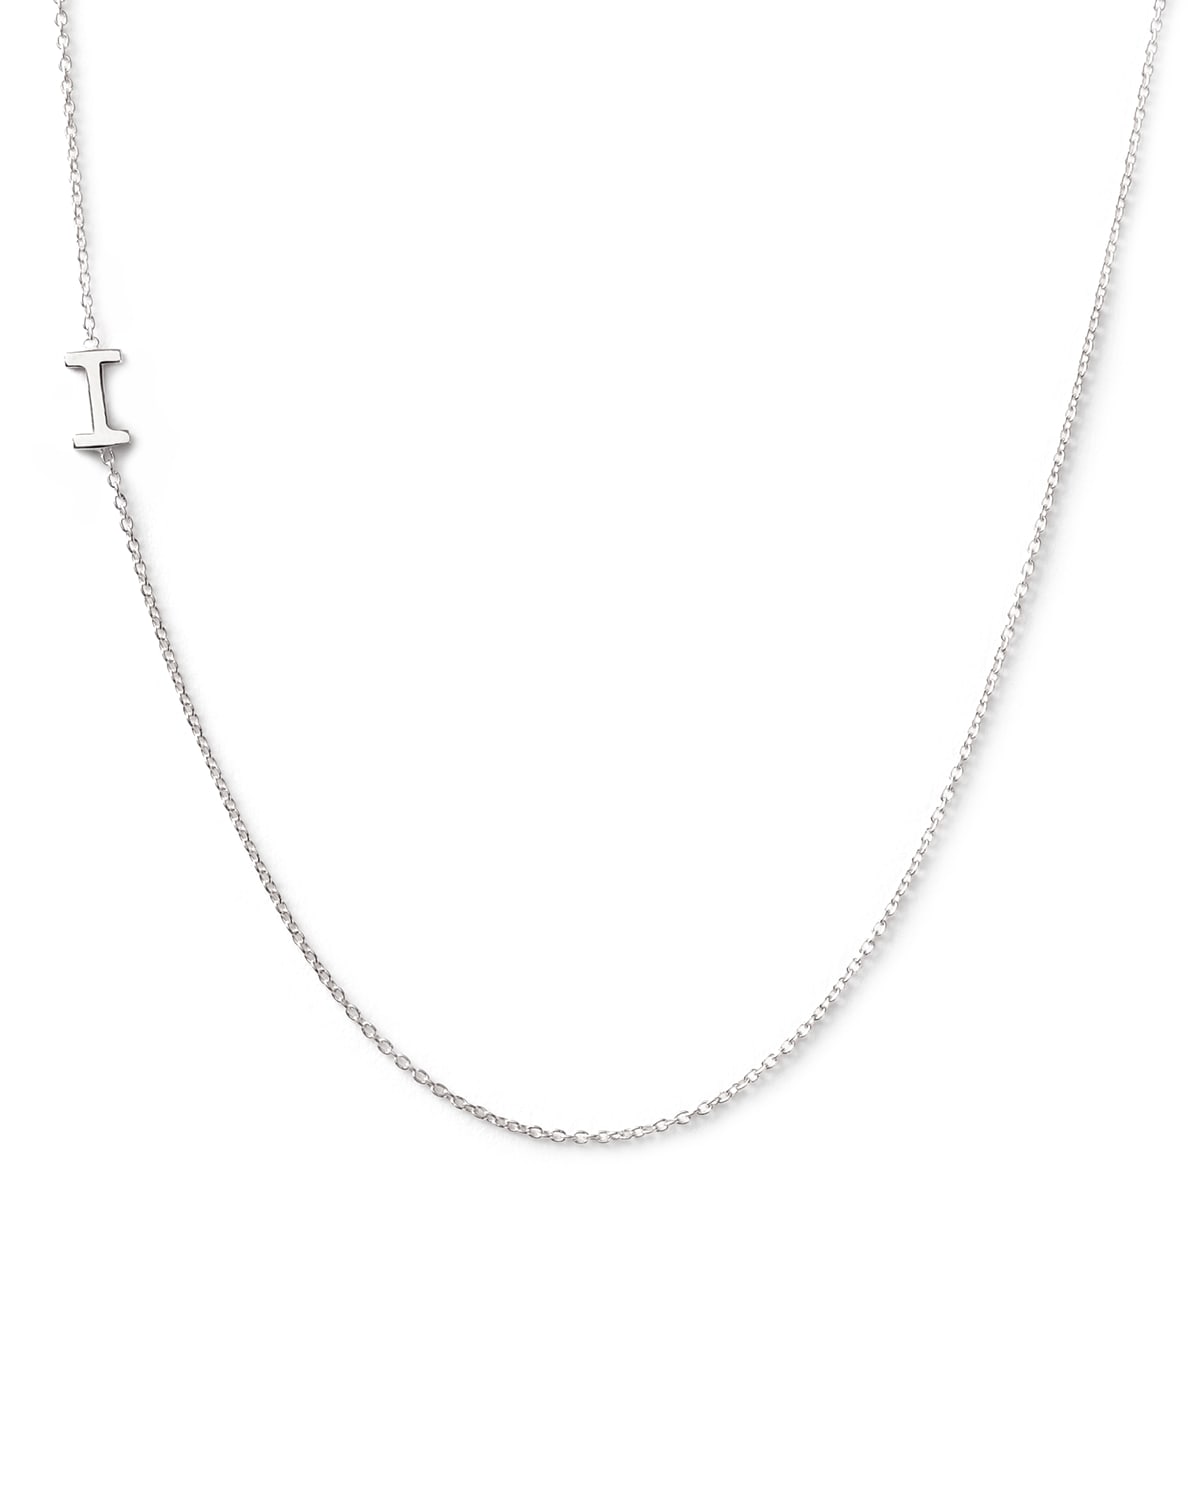 Maya Brenner Designs 14k White Gold Mini Letter Necklace In I